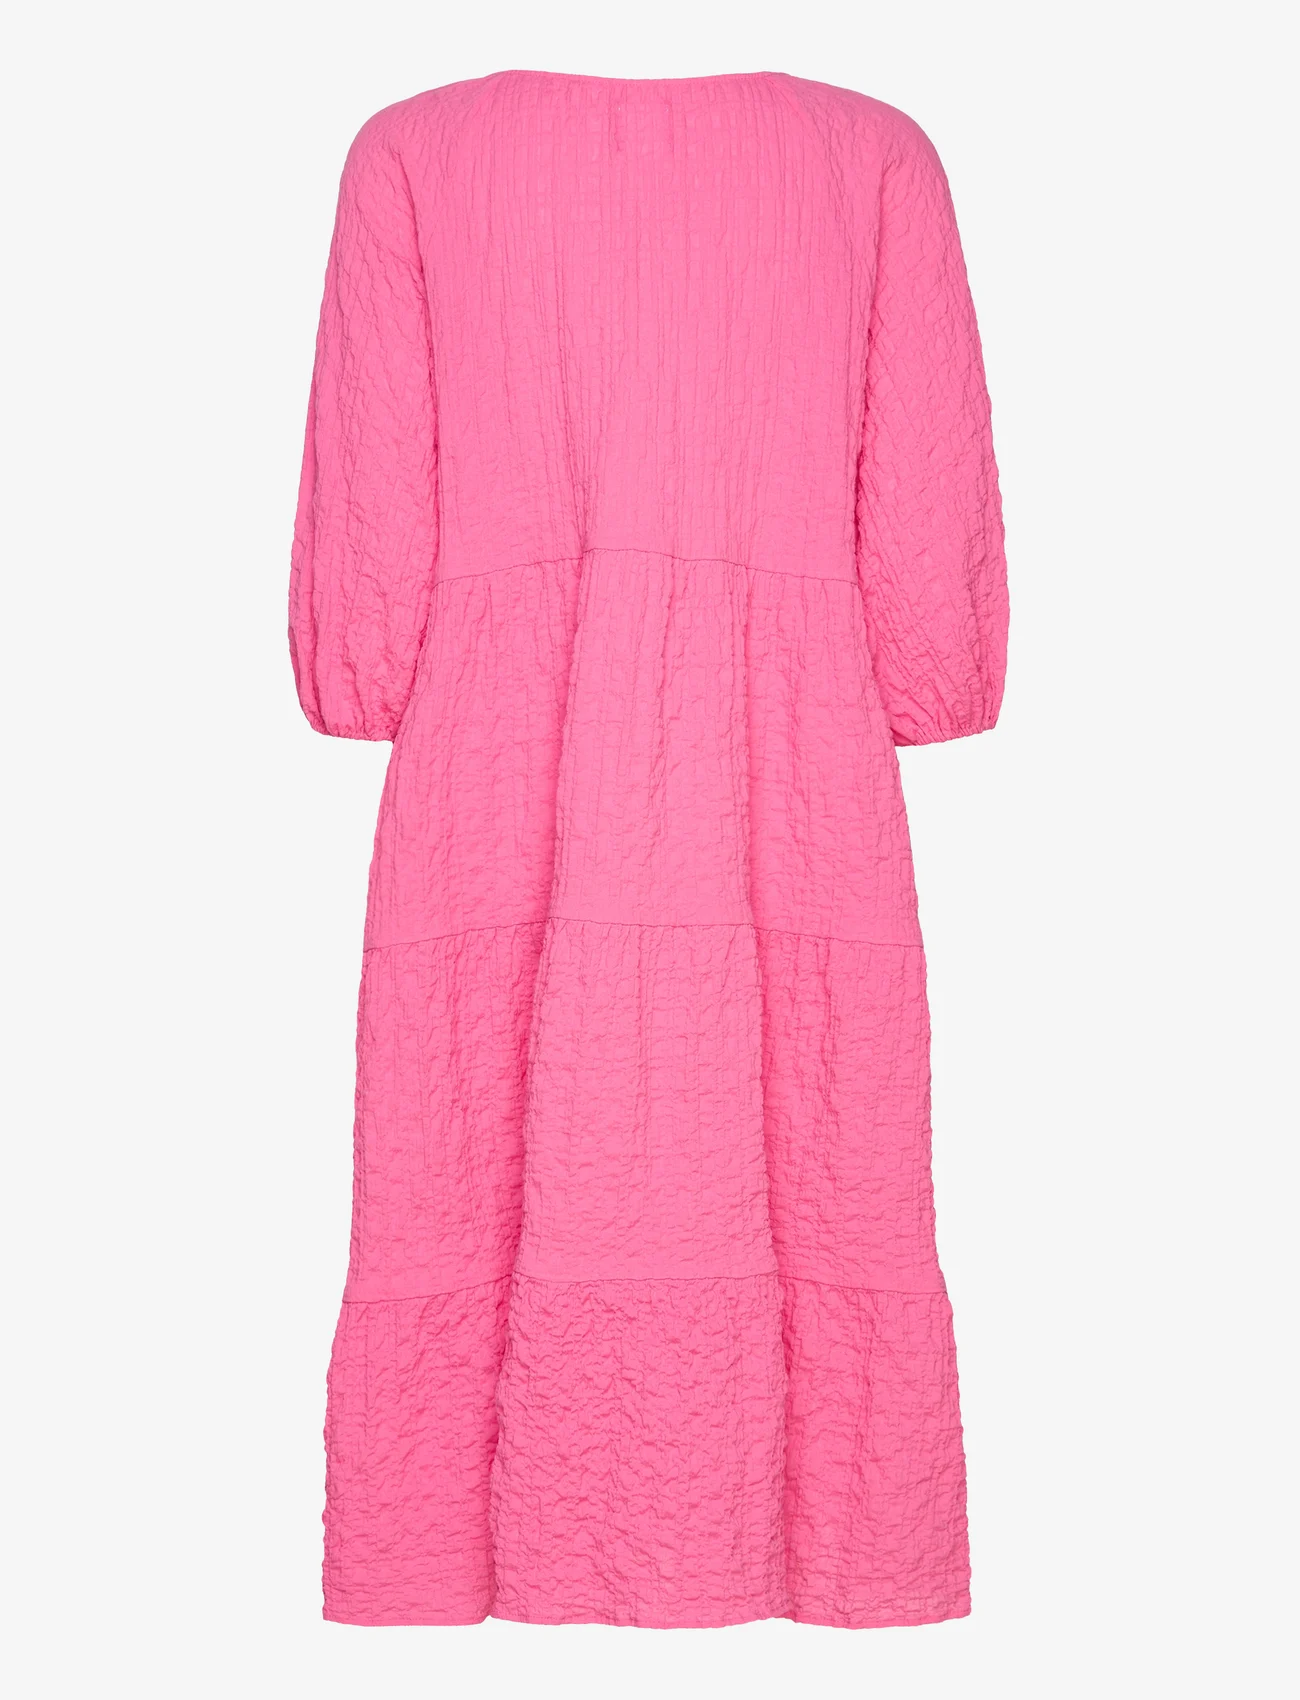 hálo - KAJO crinkled midi dress - ballīšu apģērbs par outlet cenām - pink - 1